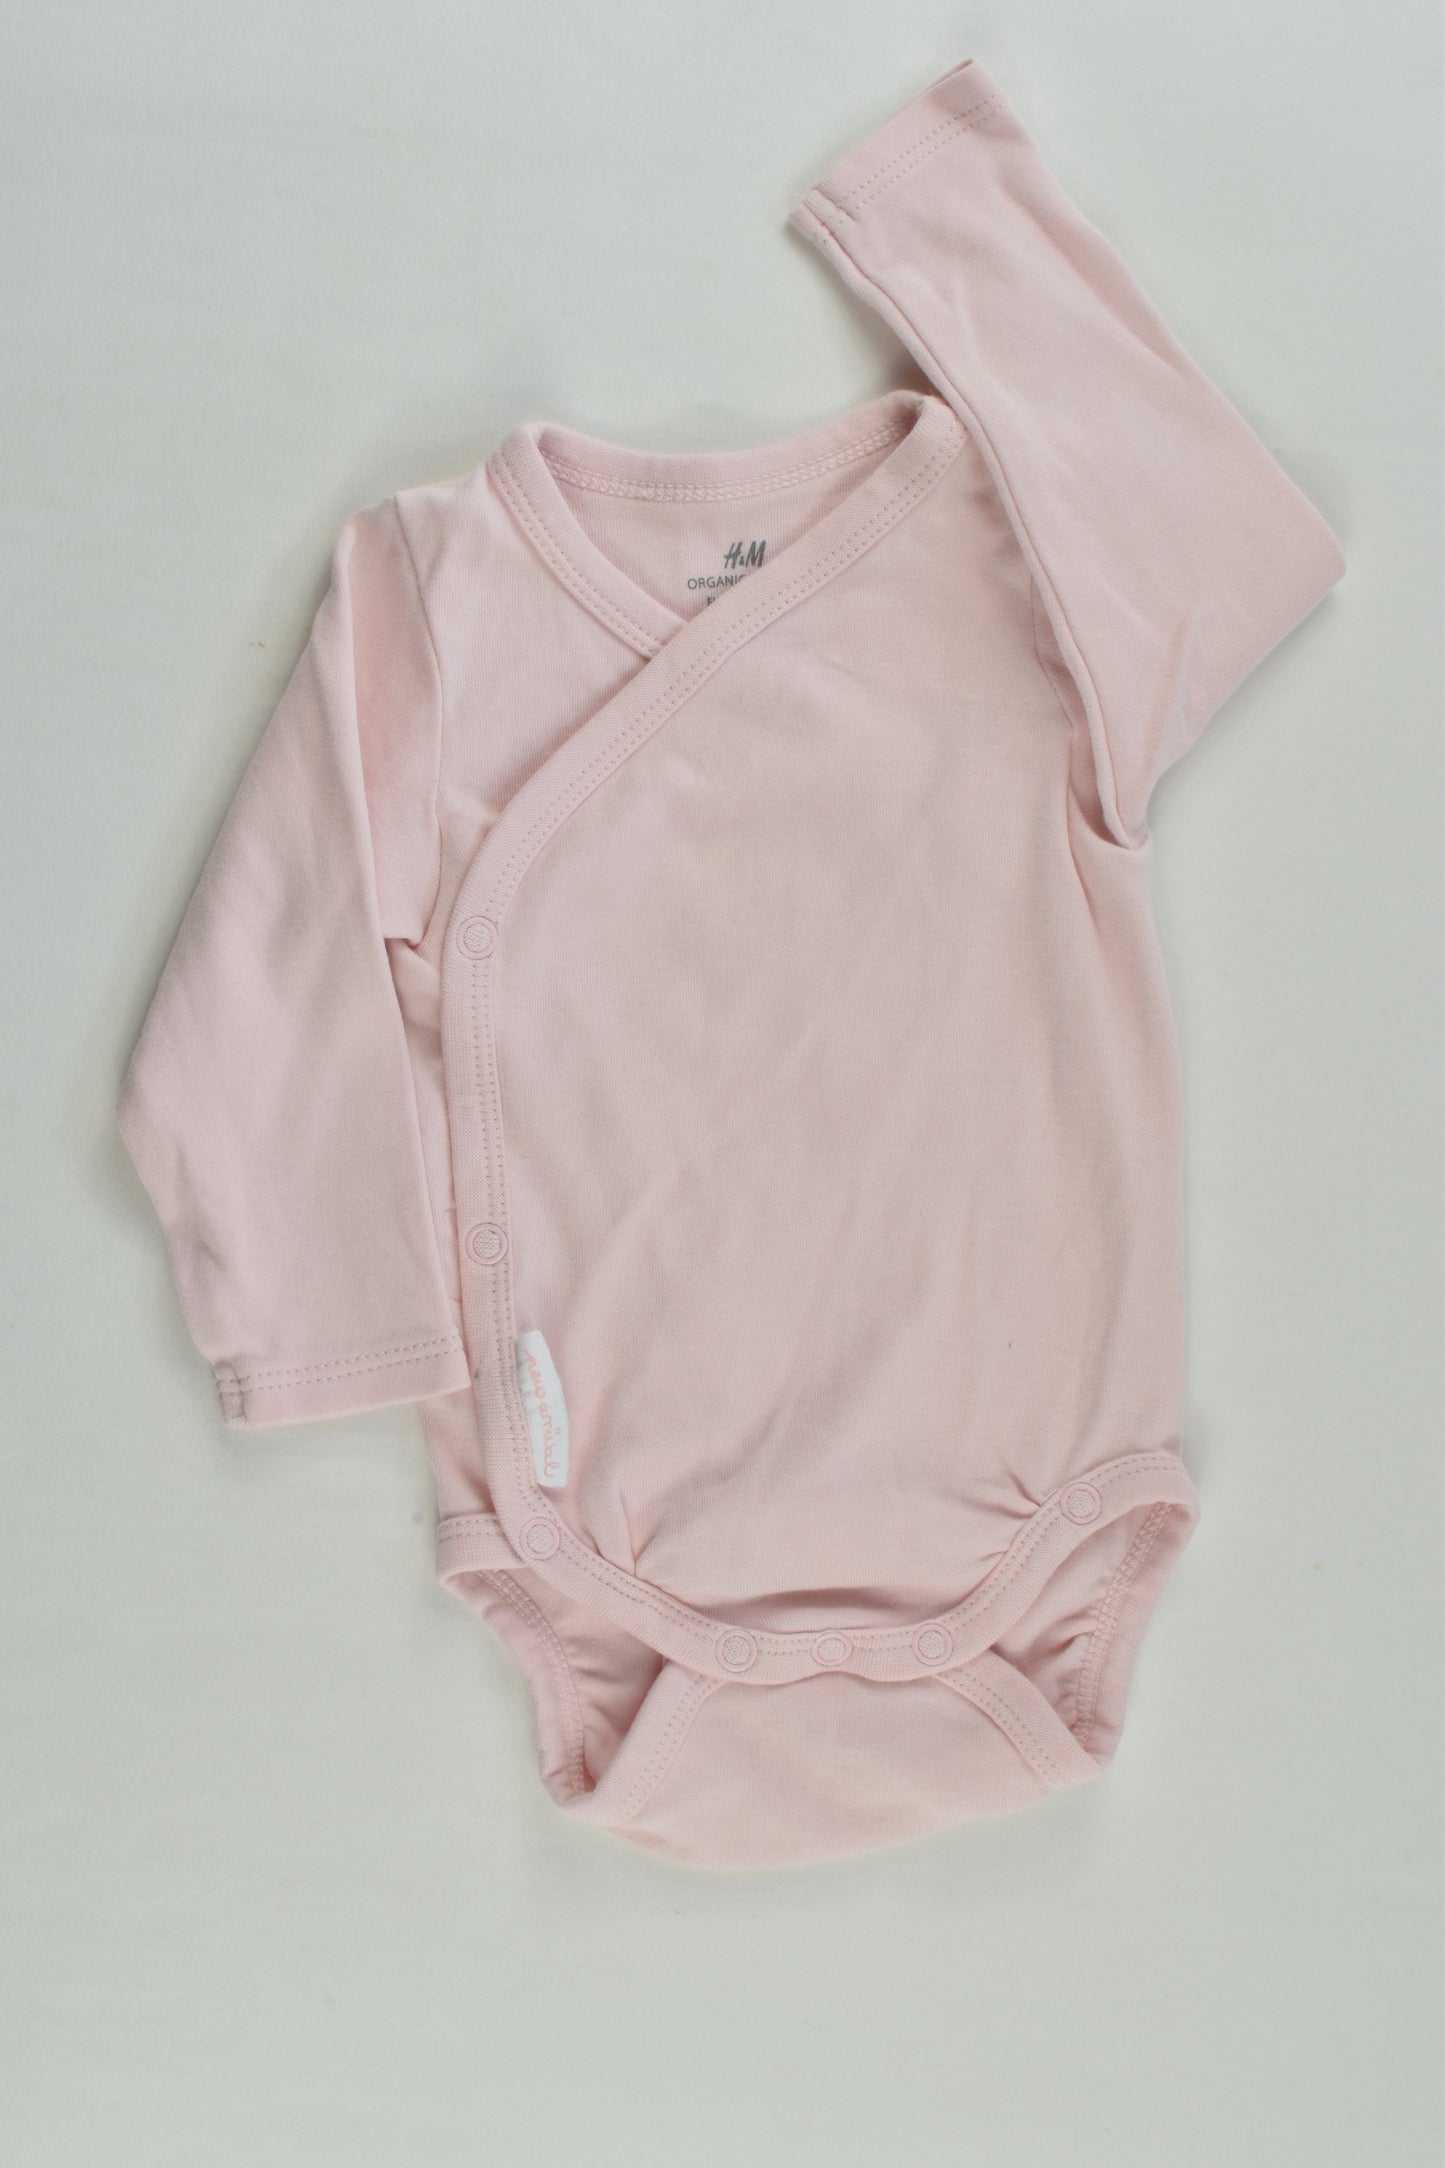 H&M Size 0000 (56 cm) 'New Arrival' Organic Wrap Bodysuit